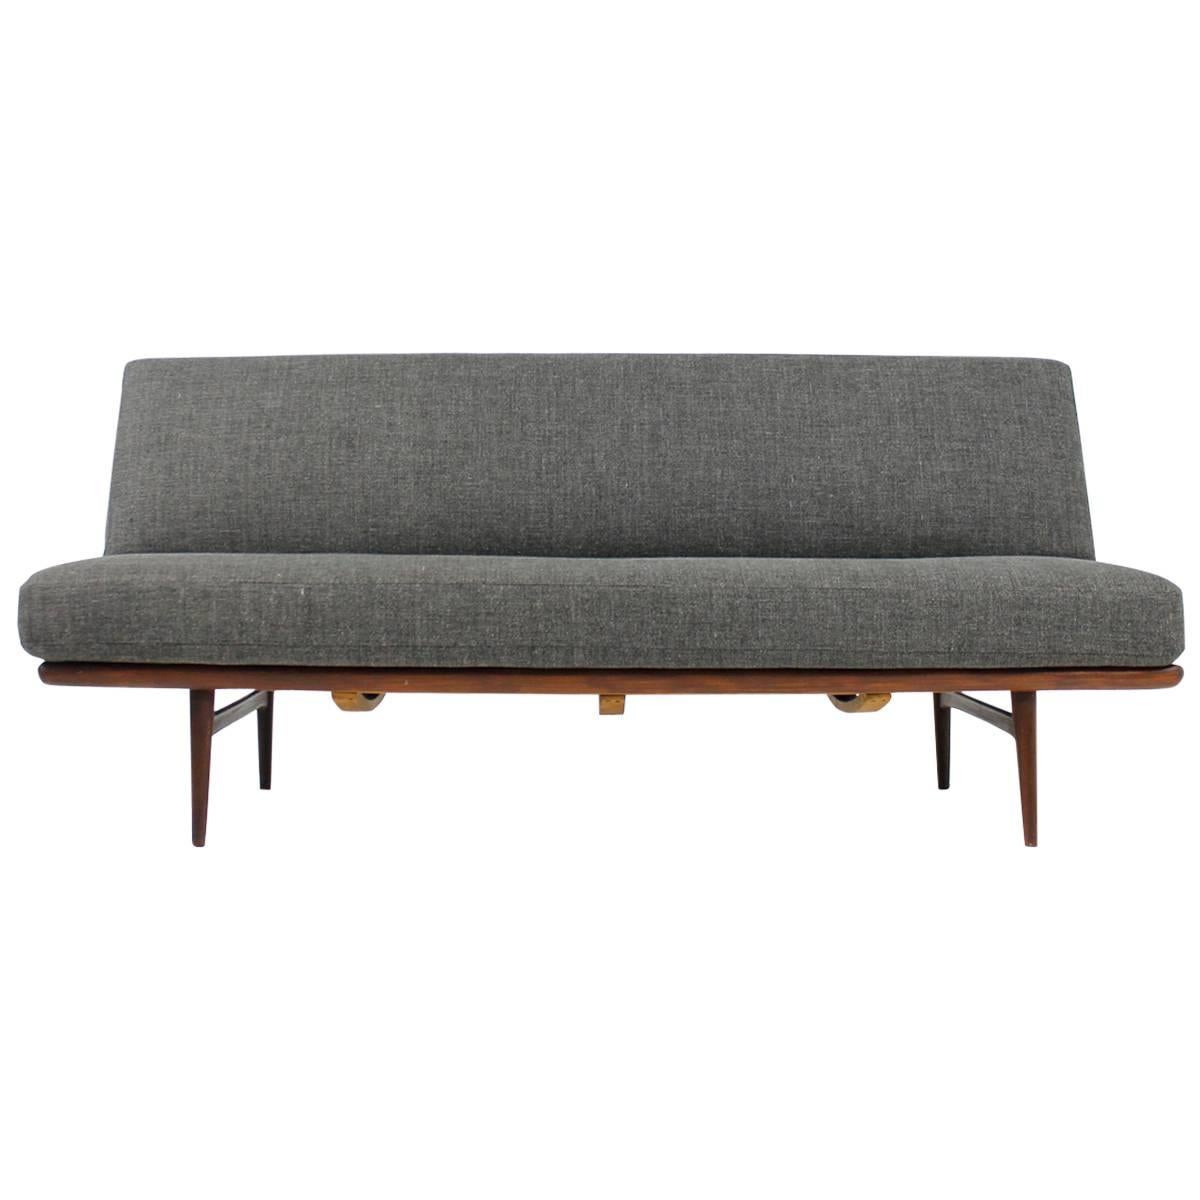 1950s Teak Daybed, Mid-Century Modern Danish Modern Lounge Sofa Prototype